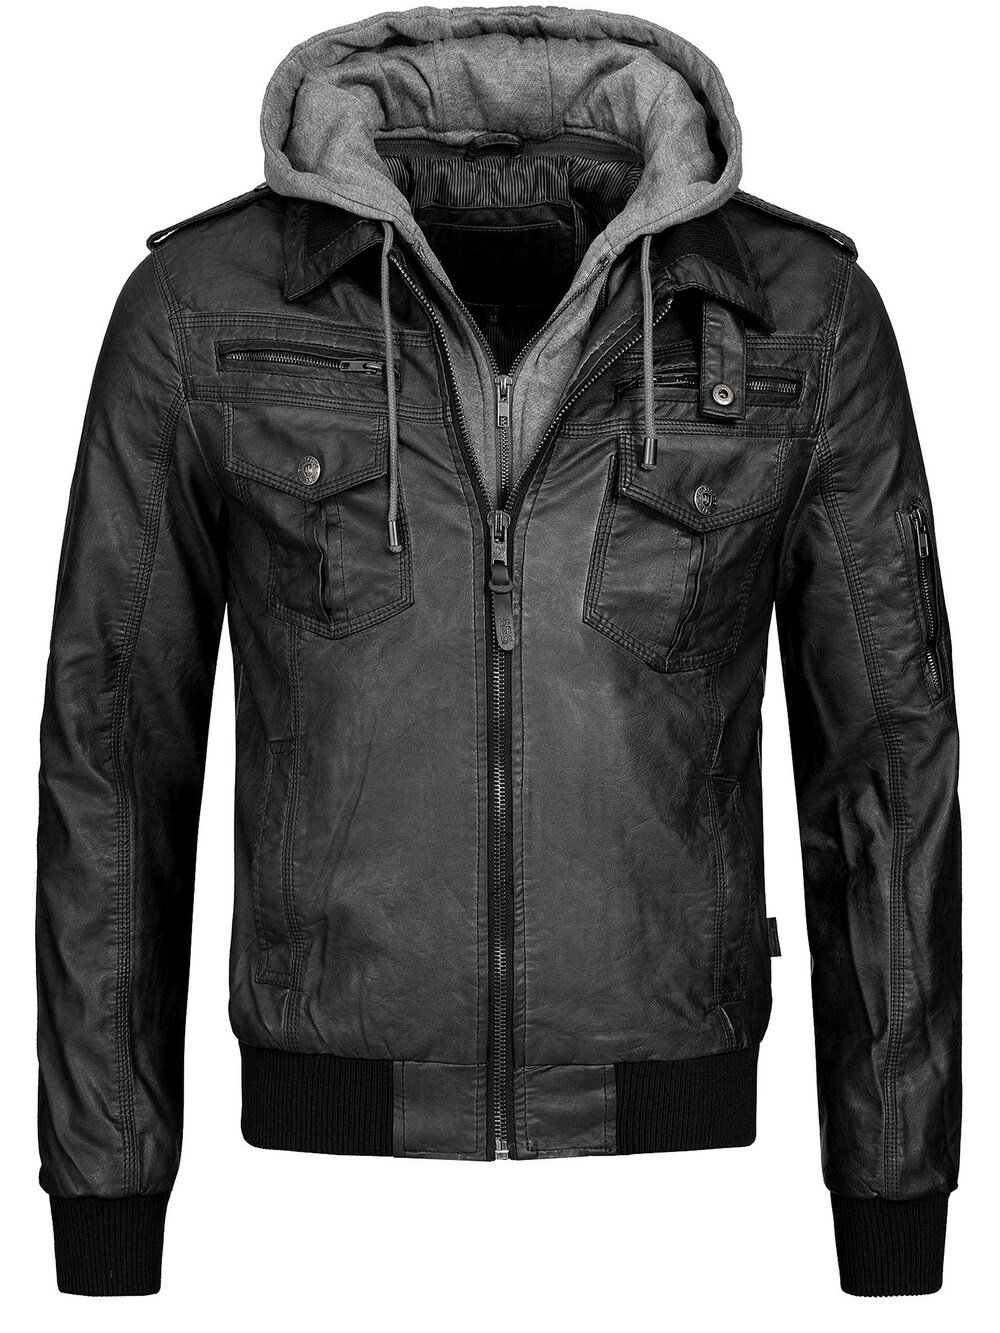 Межсезонная куртка INDICODE JEANS Aaron, черный межсезонная куртка indicode jeans aaron черный